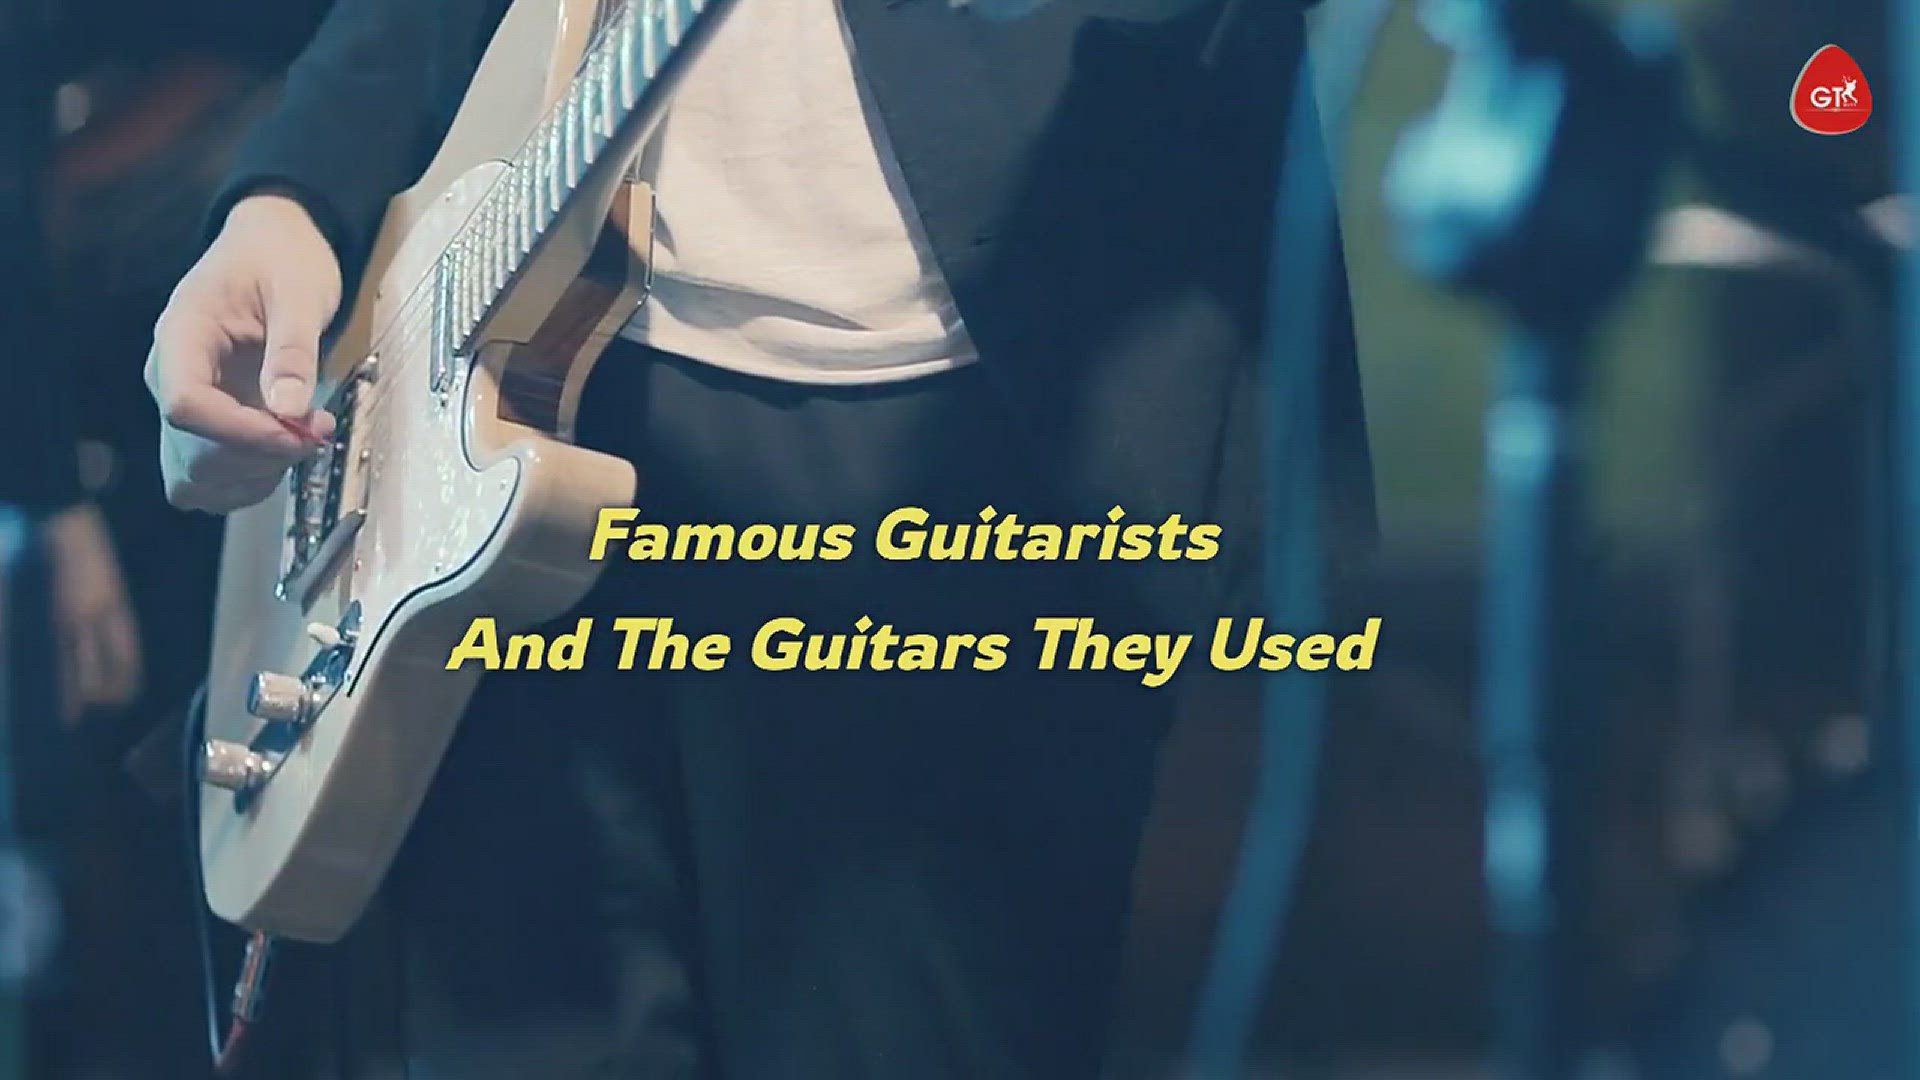 Mark Knopfler & Dire Straits - 100% Guitar Rock (2cd) NEW 2 x CD